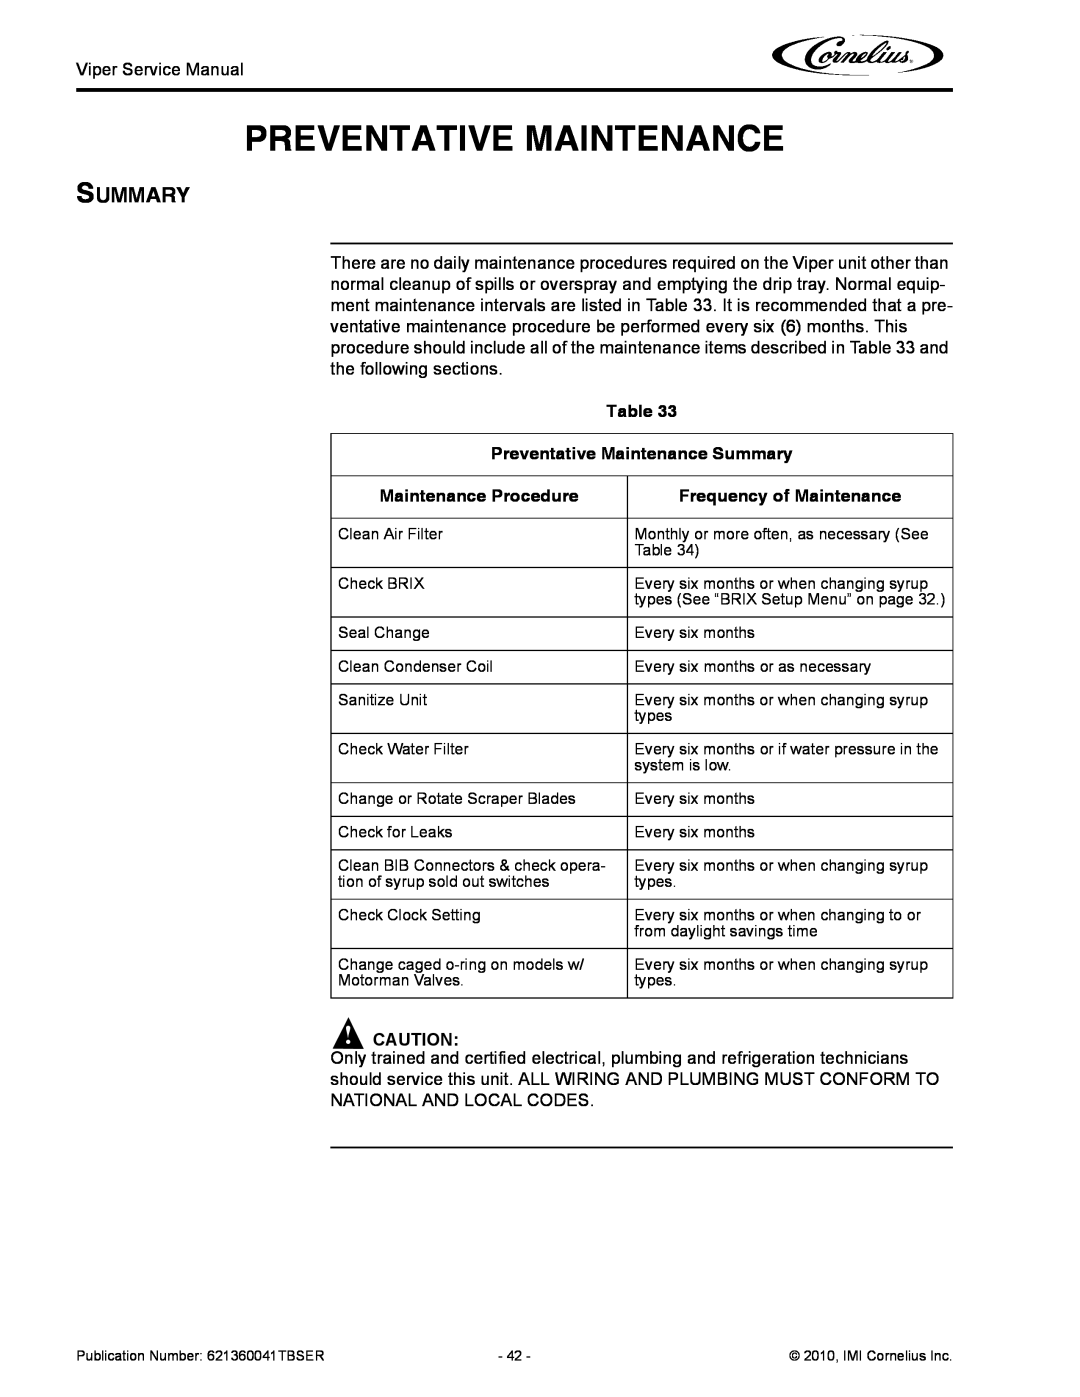 Cornelius 3 service manual Table Preventative Maintenance Summary, Maintenance Procedure, Frequency of Maintenance 